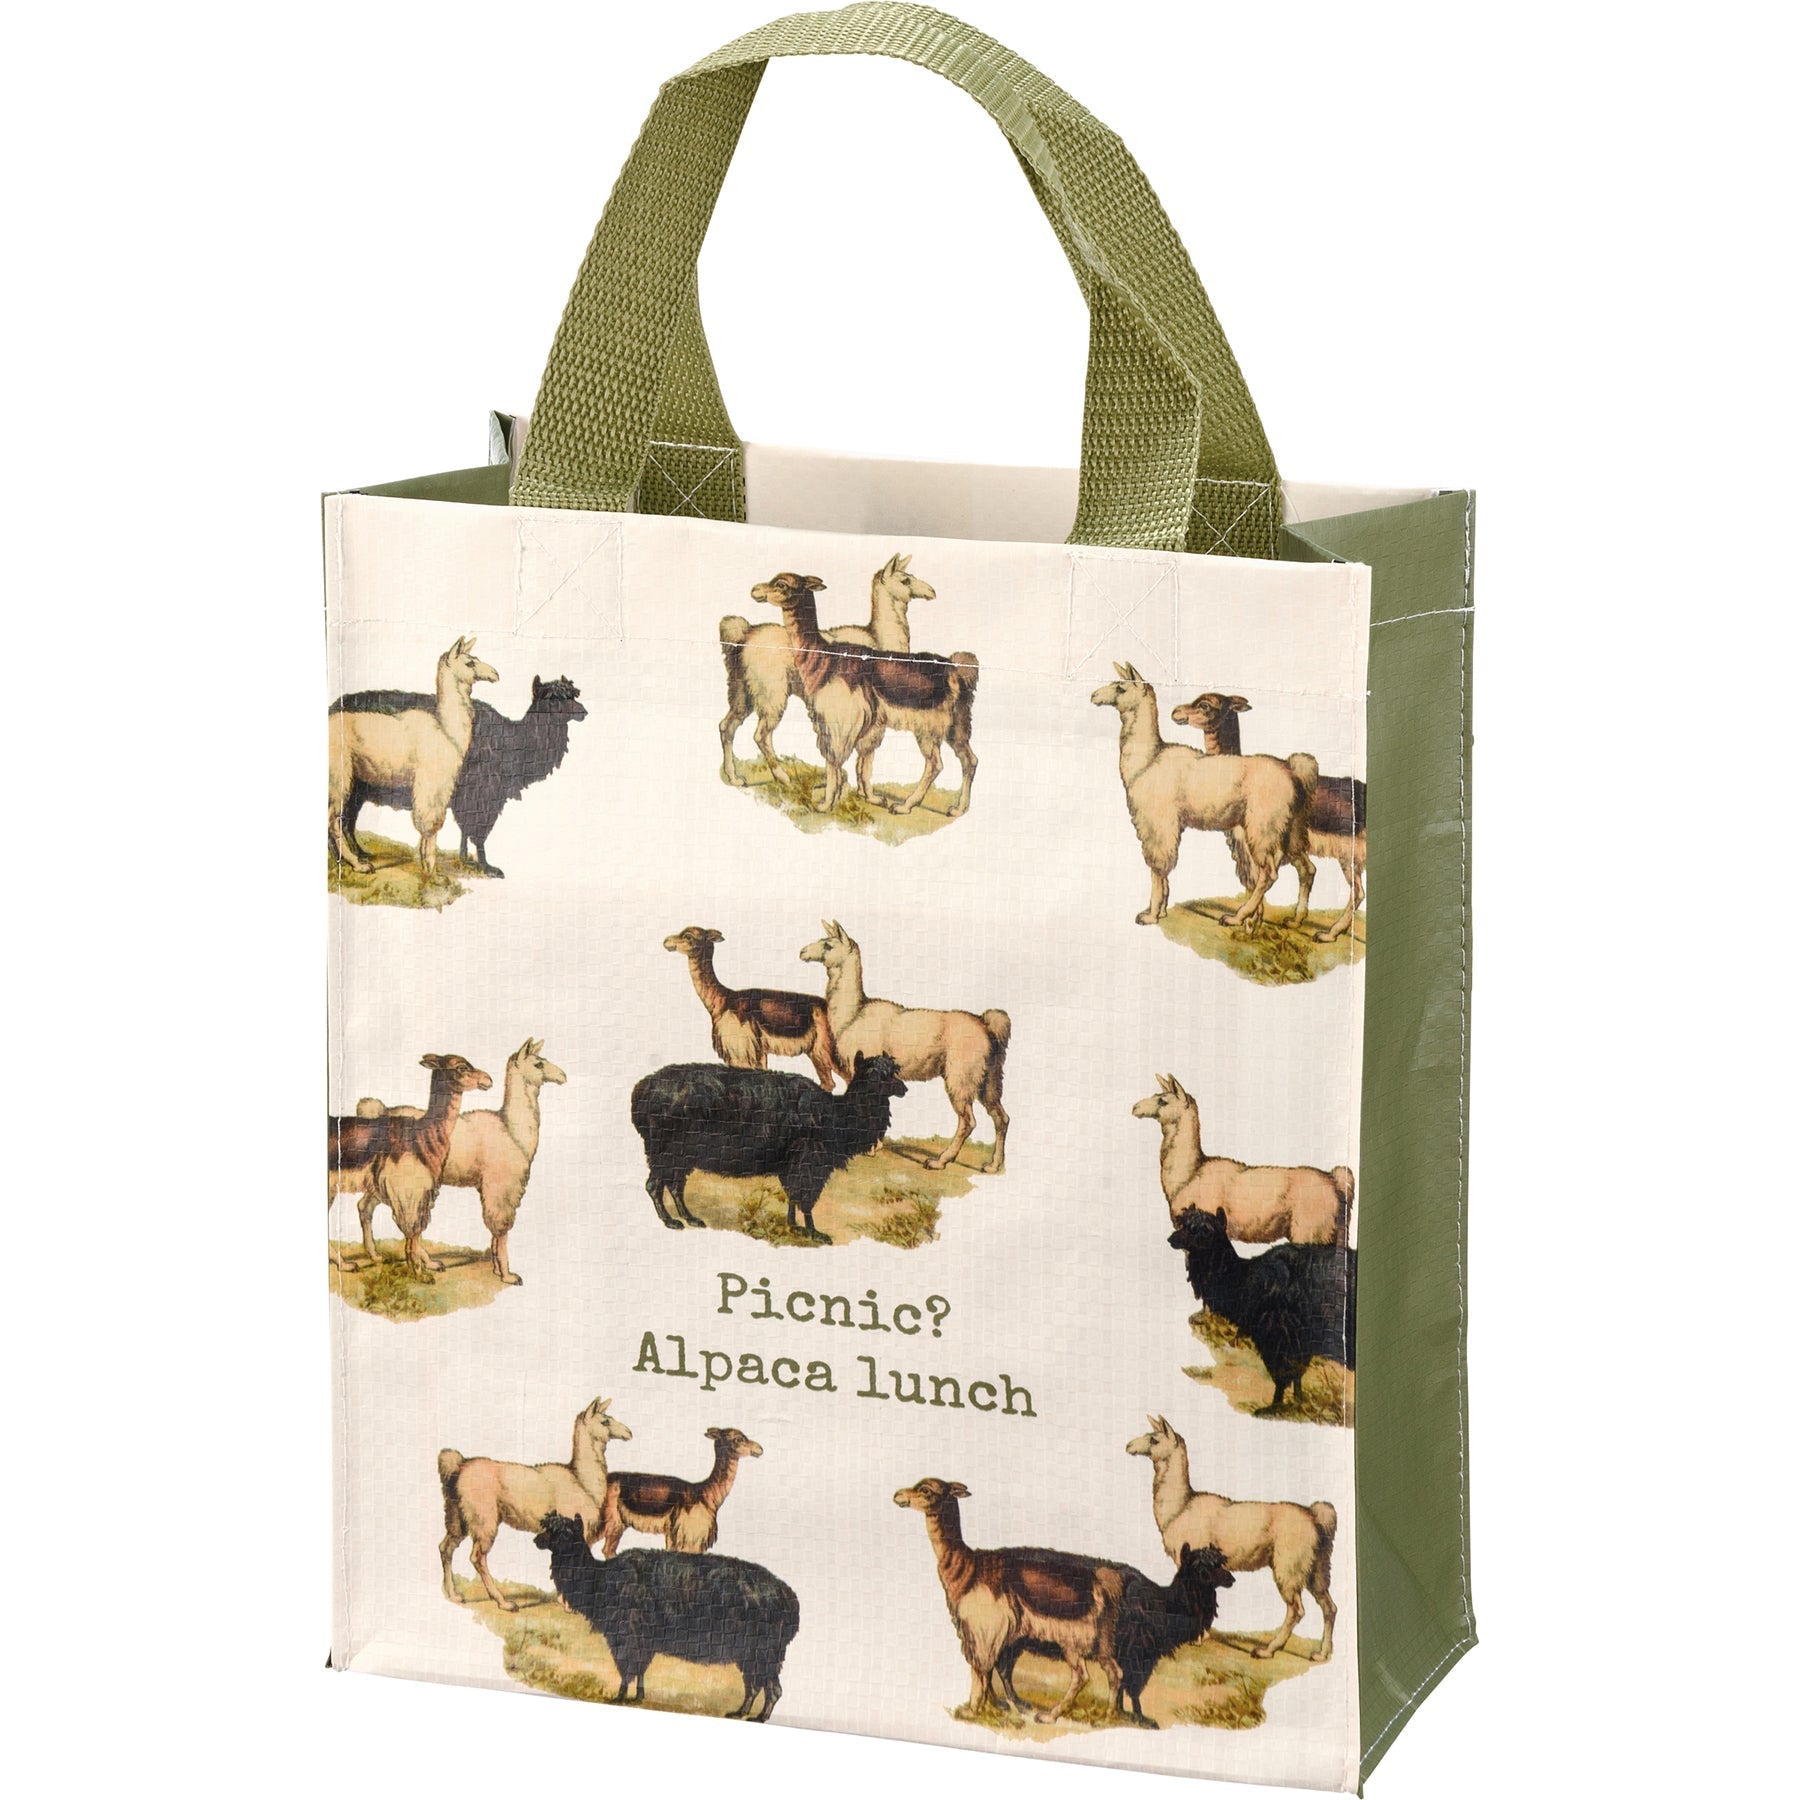 Sheep Happens - Picnic Alpaca Lunch Daily Handy Tote Bag